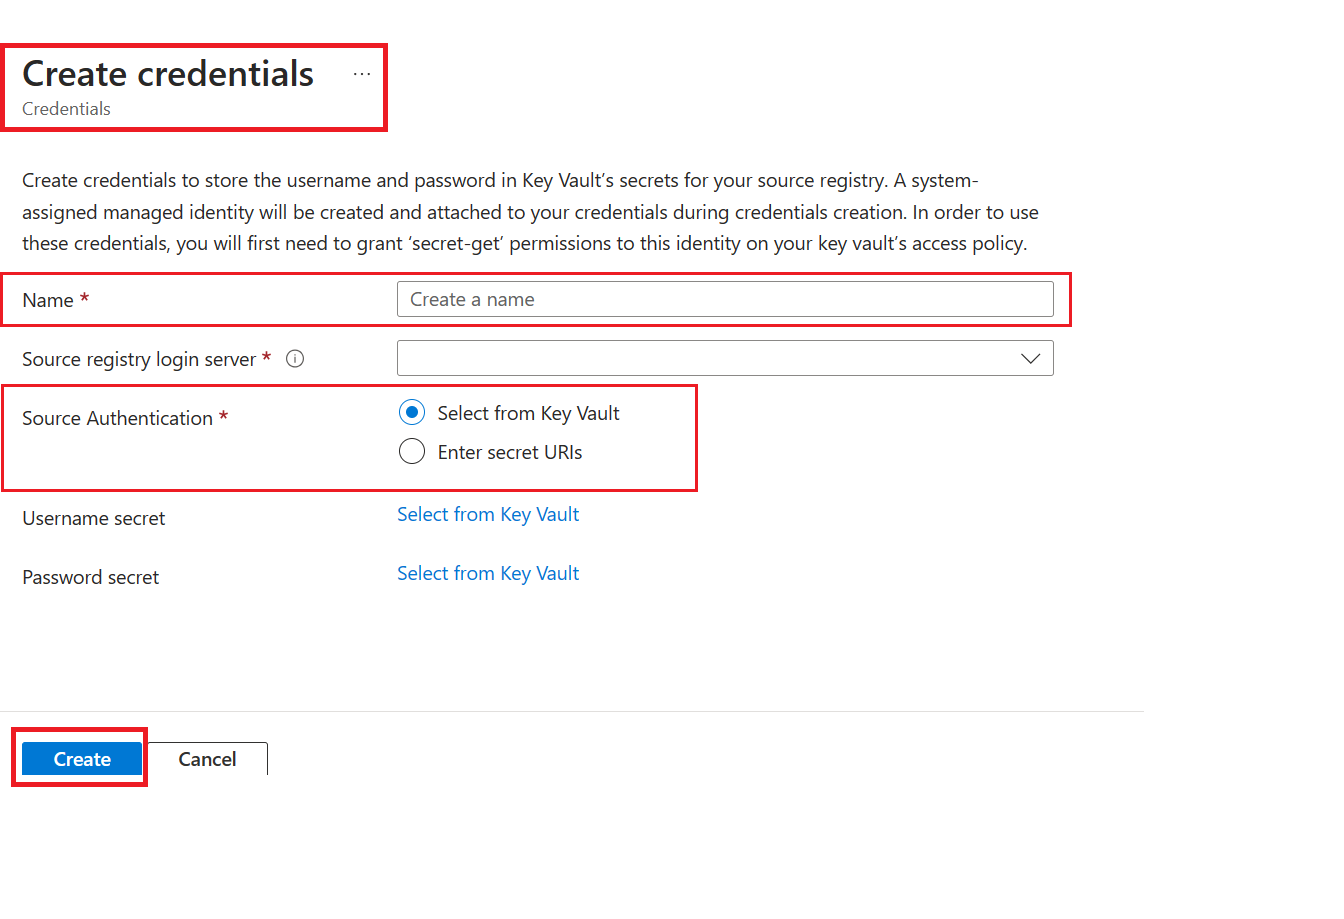 Screenshot for create new credentials in Azure portal.